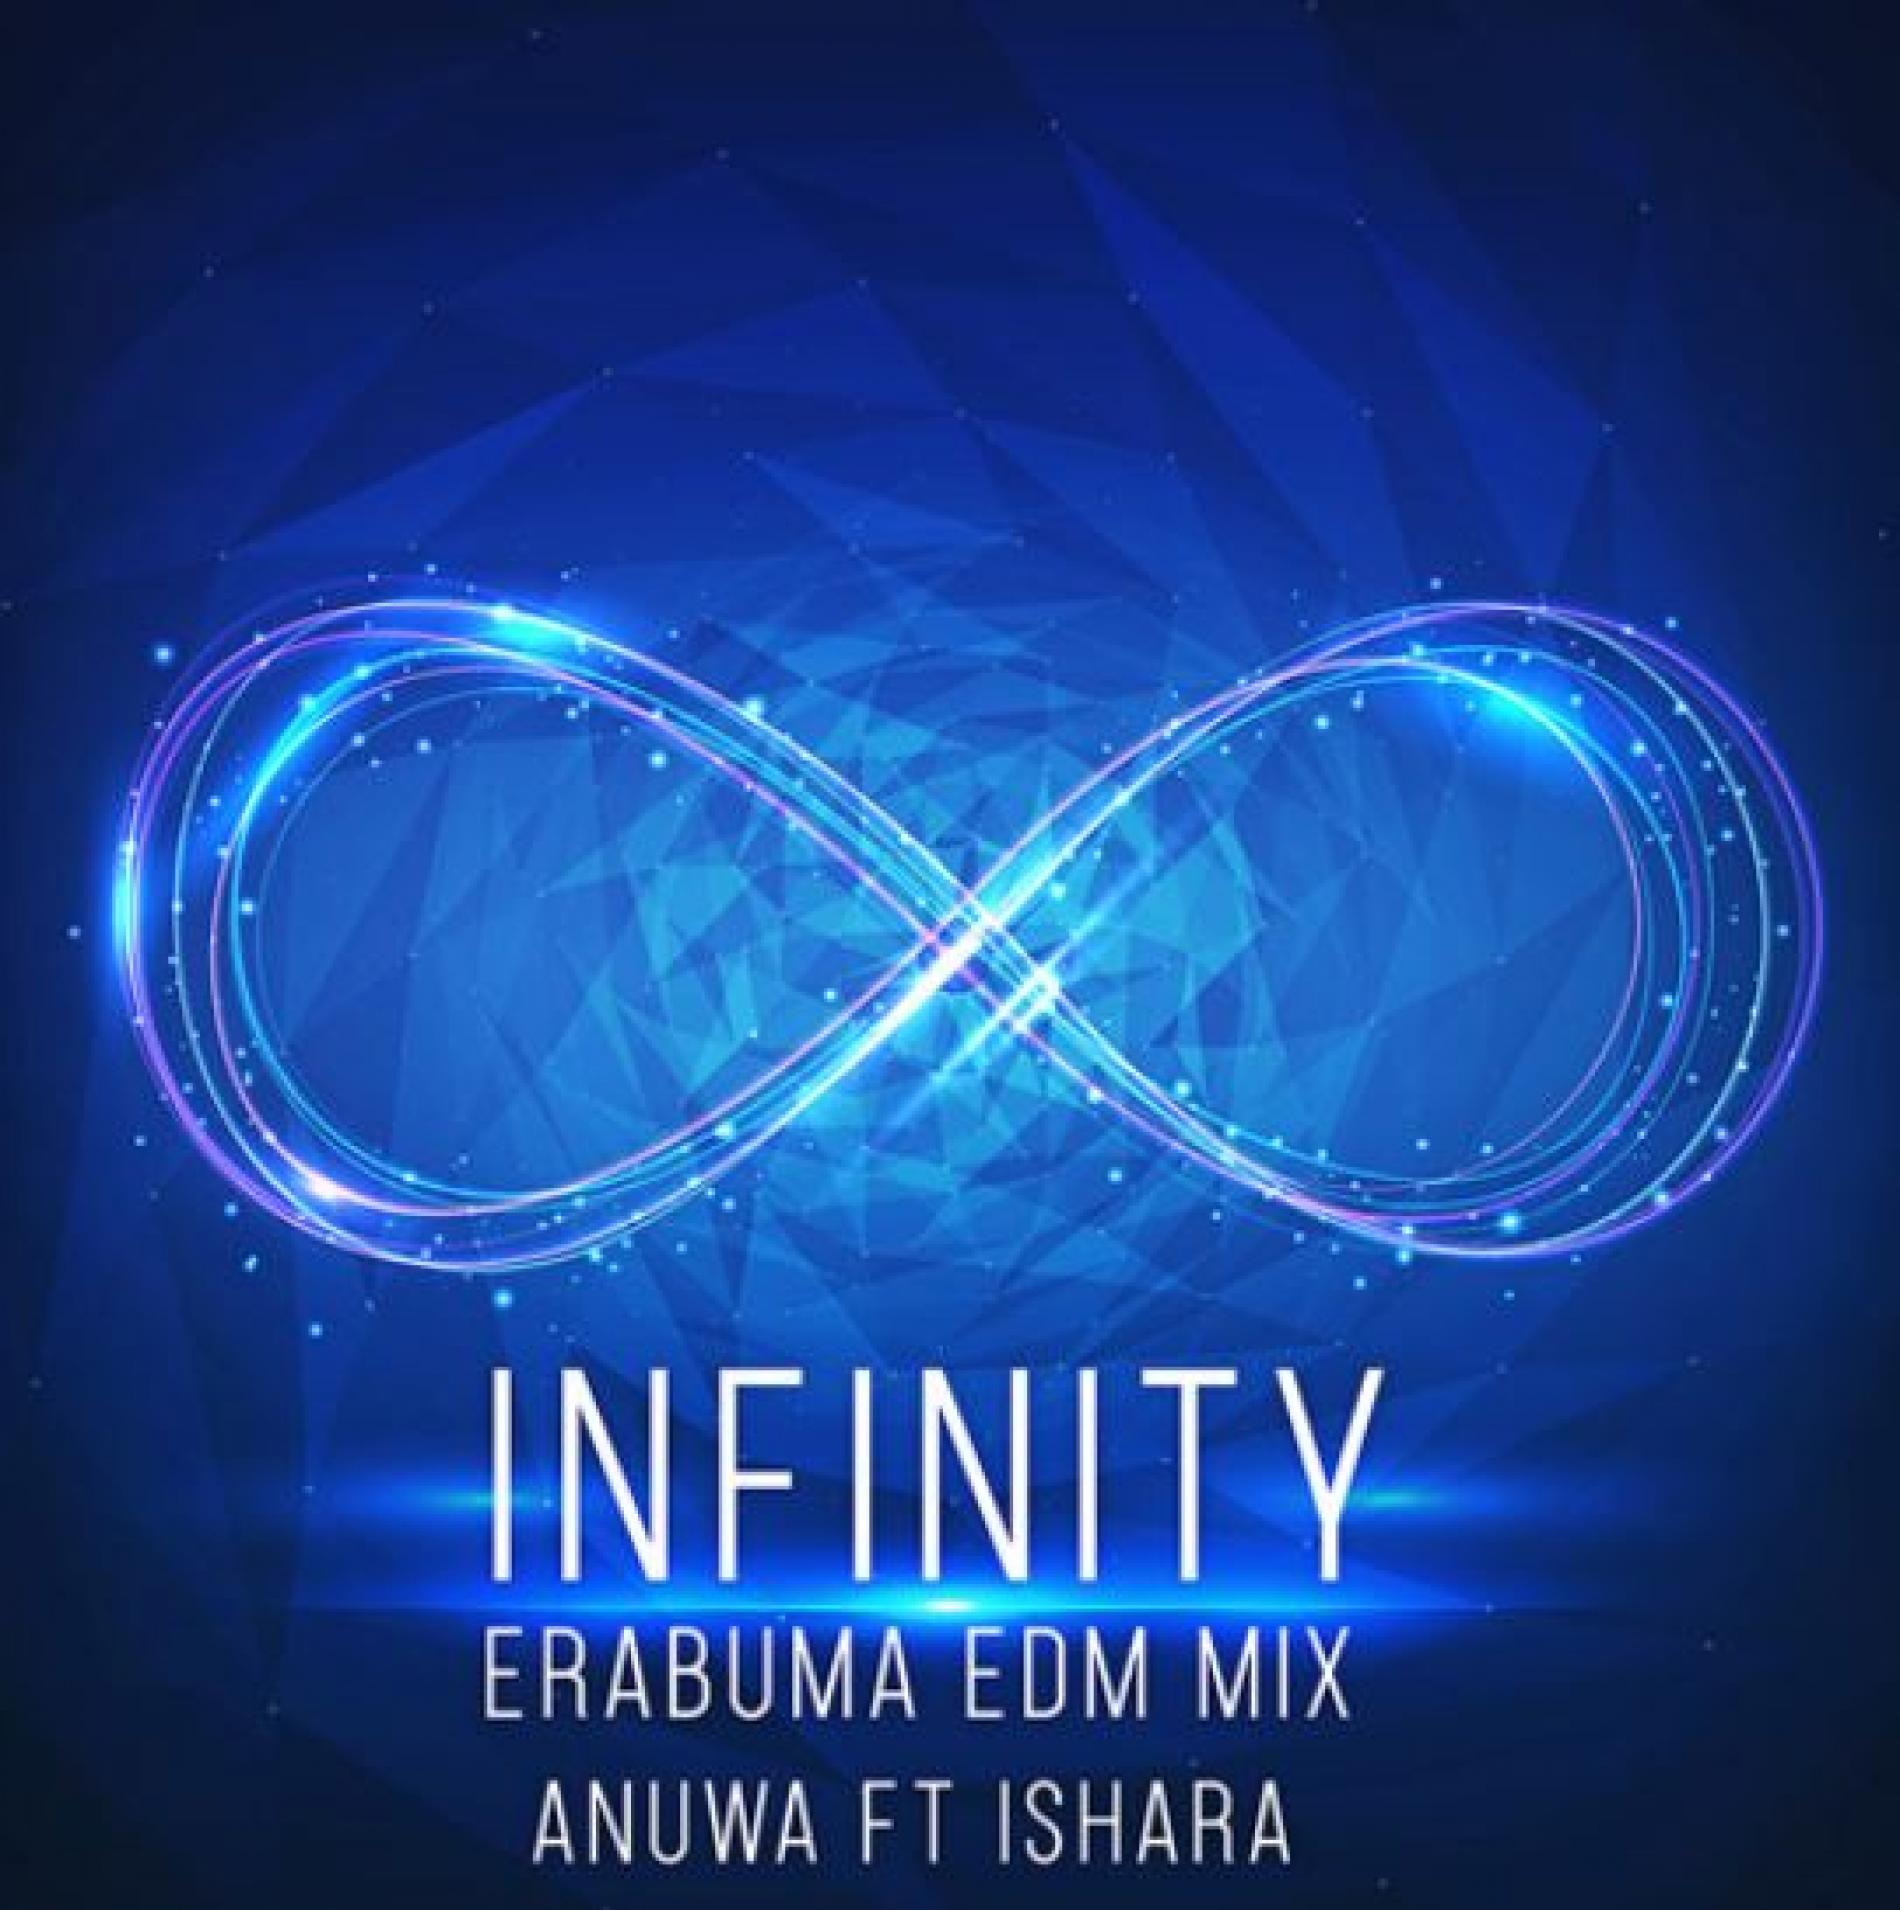 AnuwA Ft Ishara – Infinity (Erabuma EDM Mix)